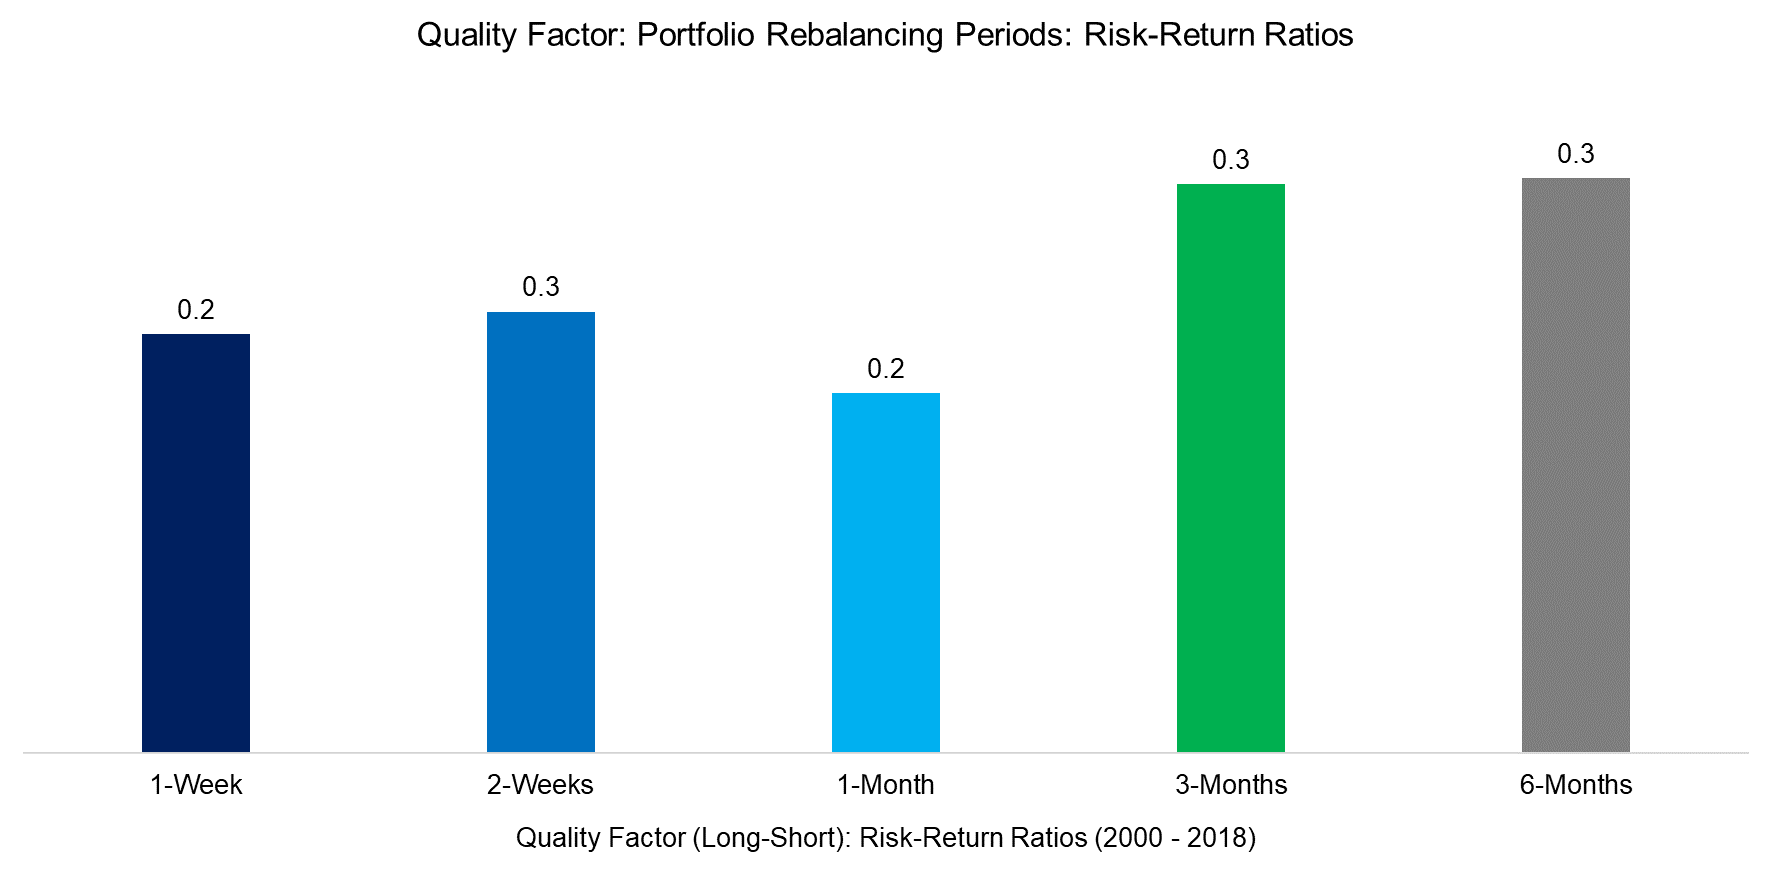 Quality Factor Portfolio Rebalancing Periods Risk-Return Ratios